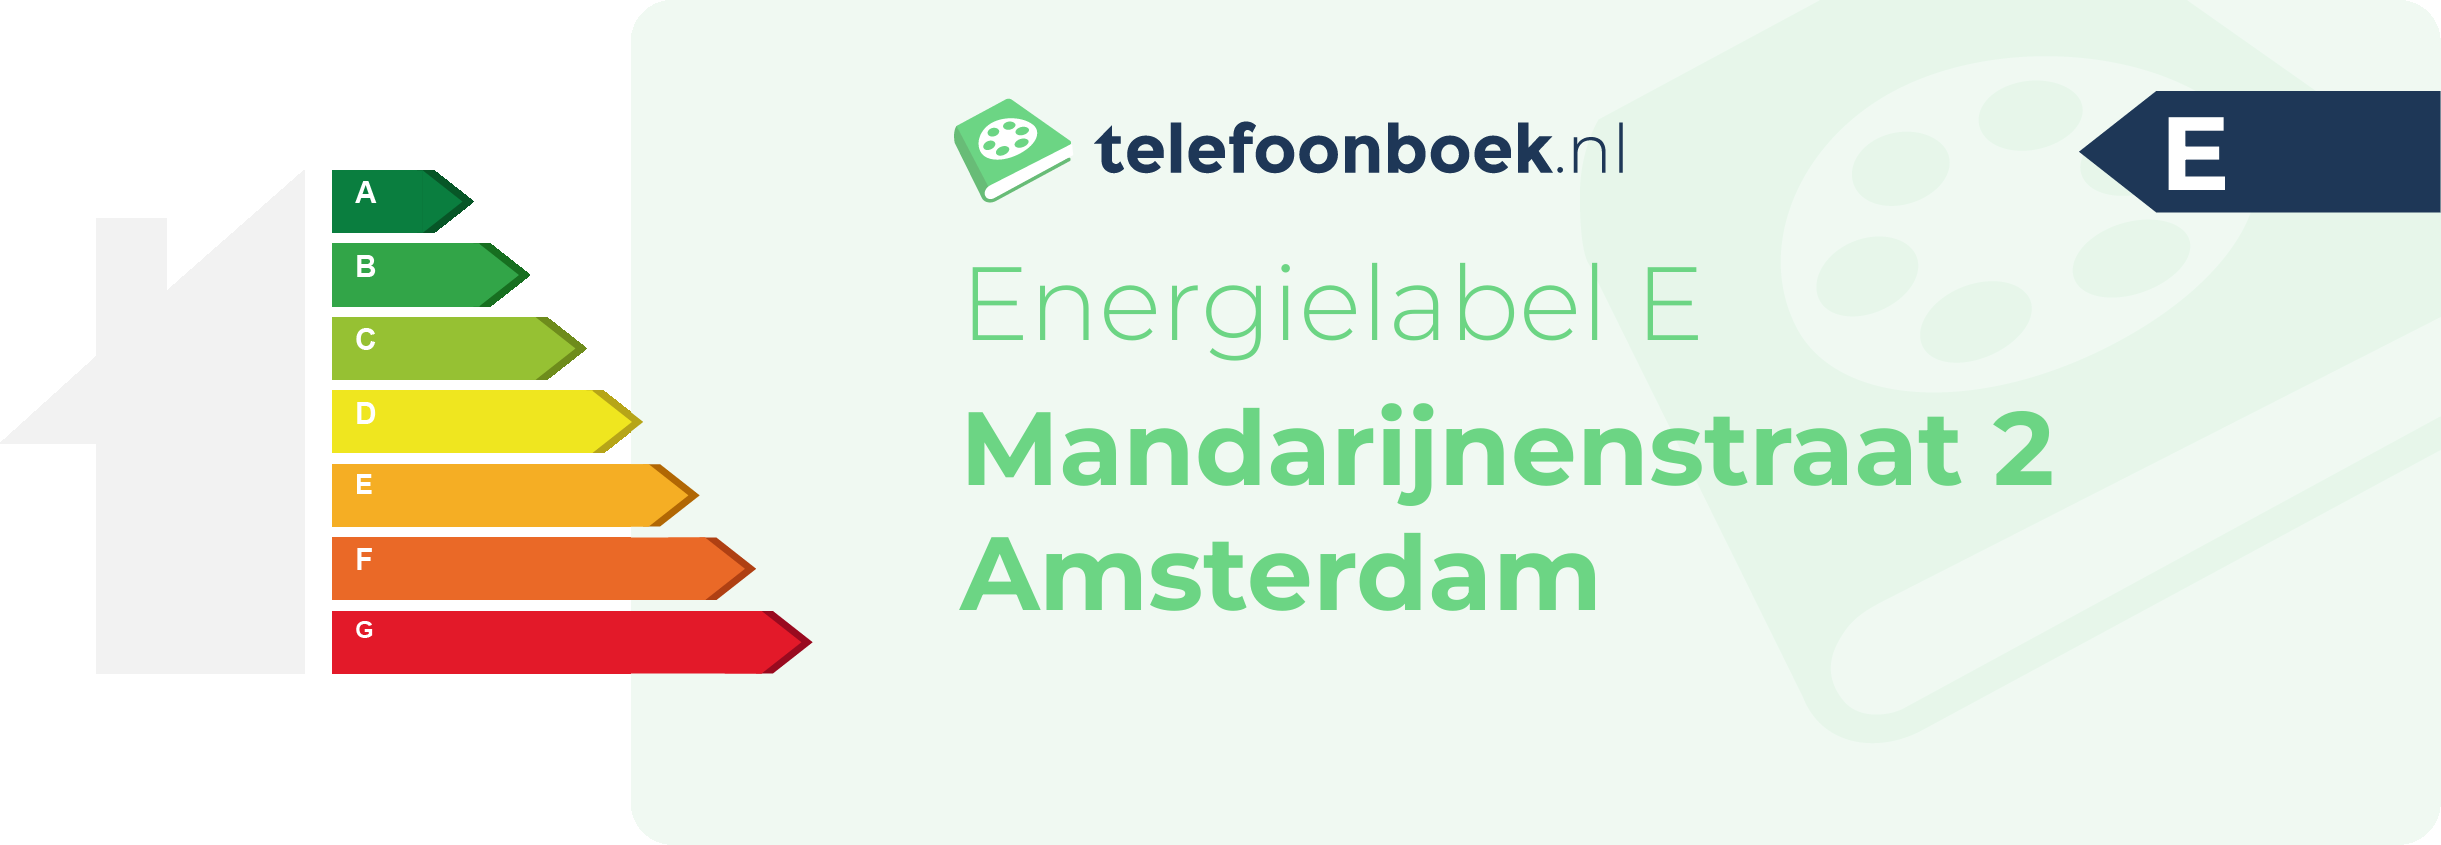 Energielabel Mandarijnenstraat 2 Amsterdam